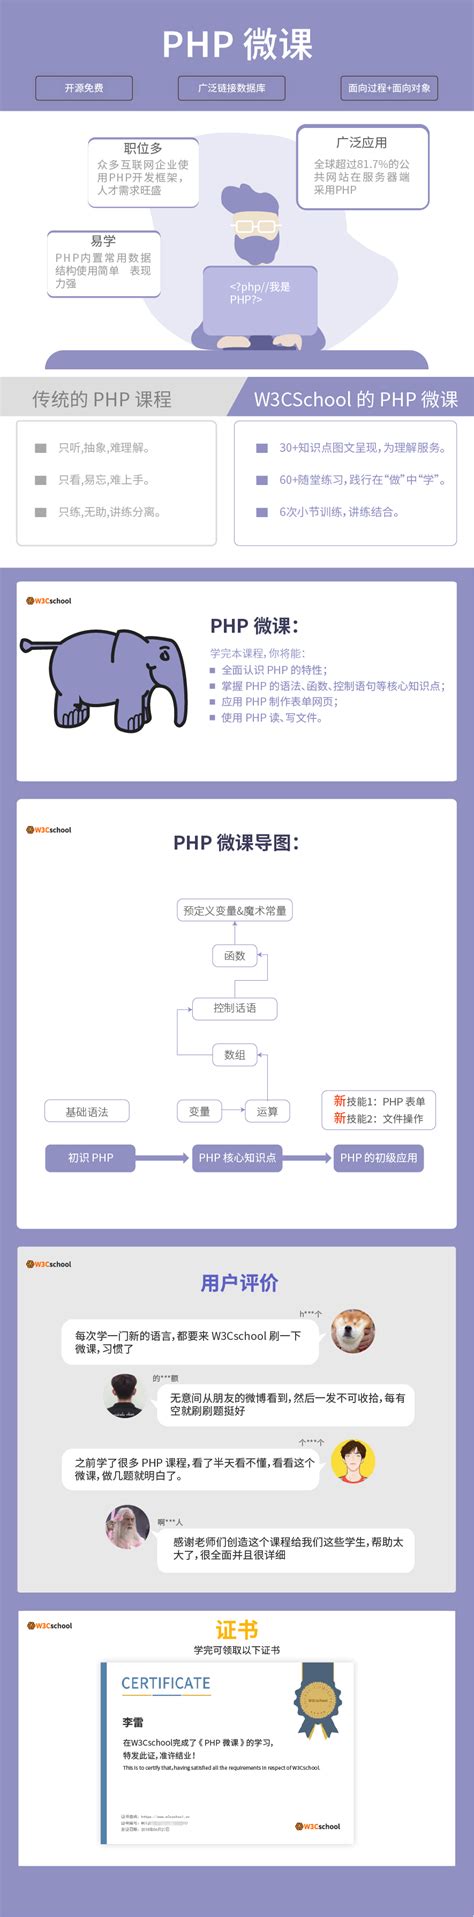 PHP 入门课程_编程实战微课_w3cschool